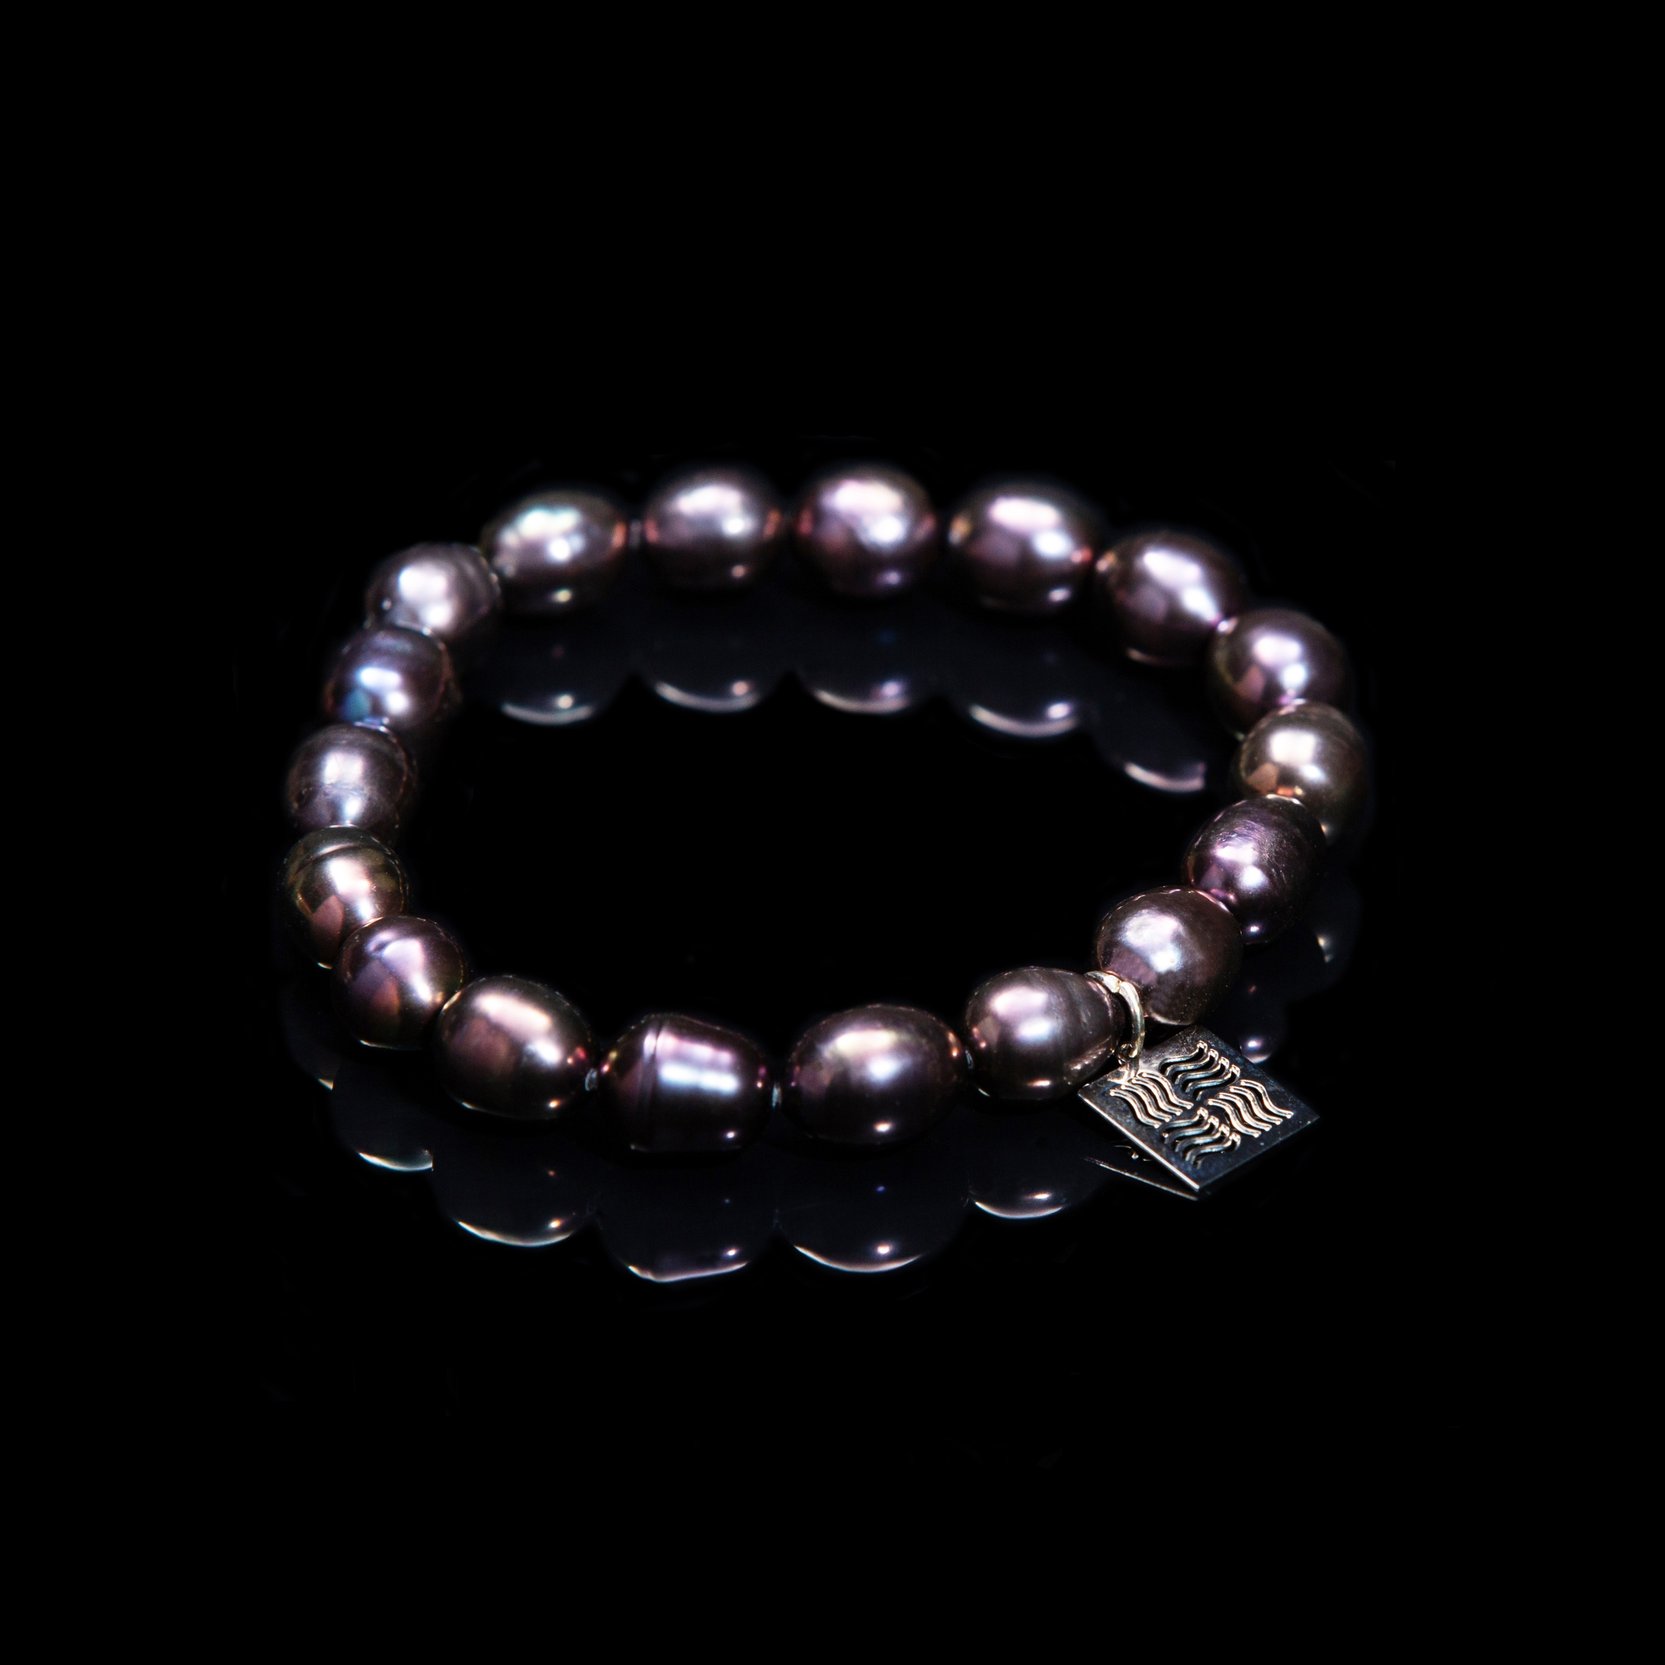 Pearl bracelet of beautiful graphite color